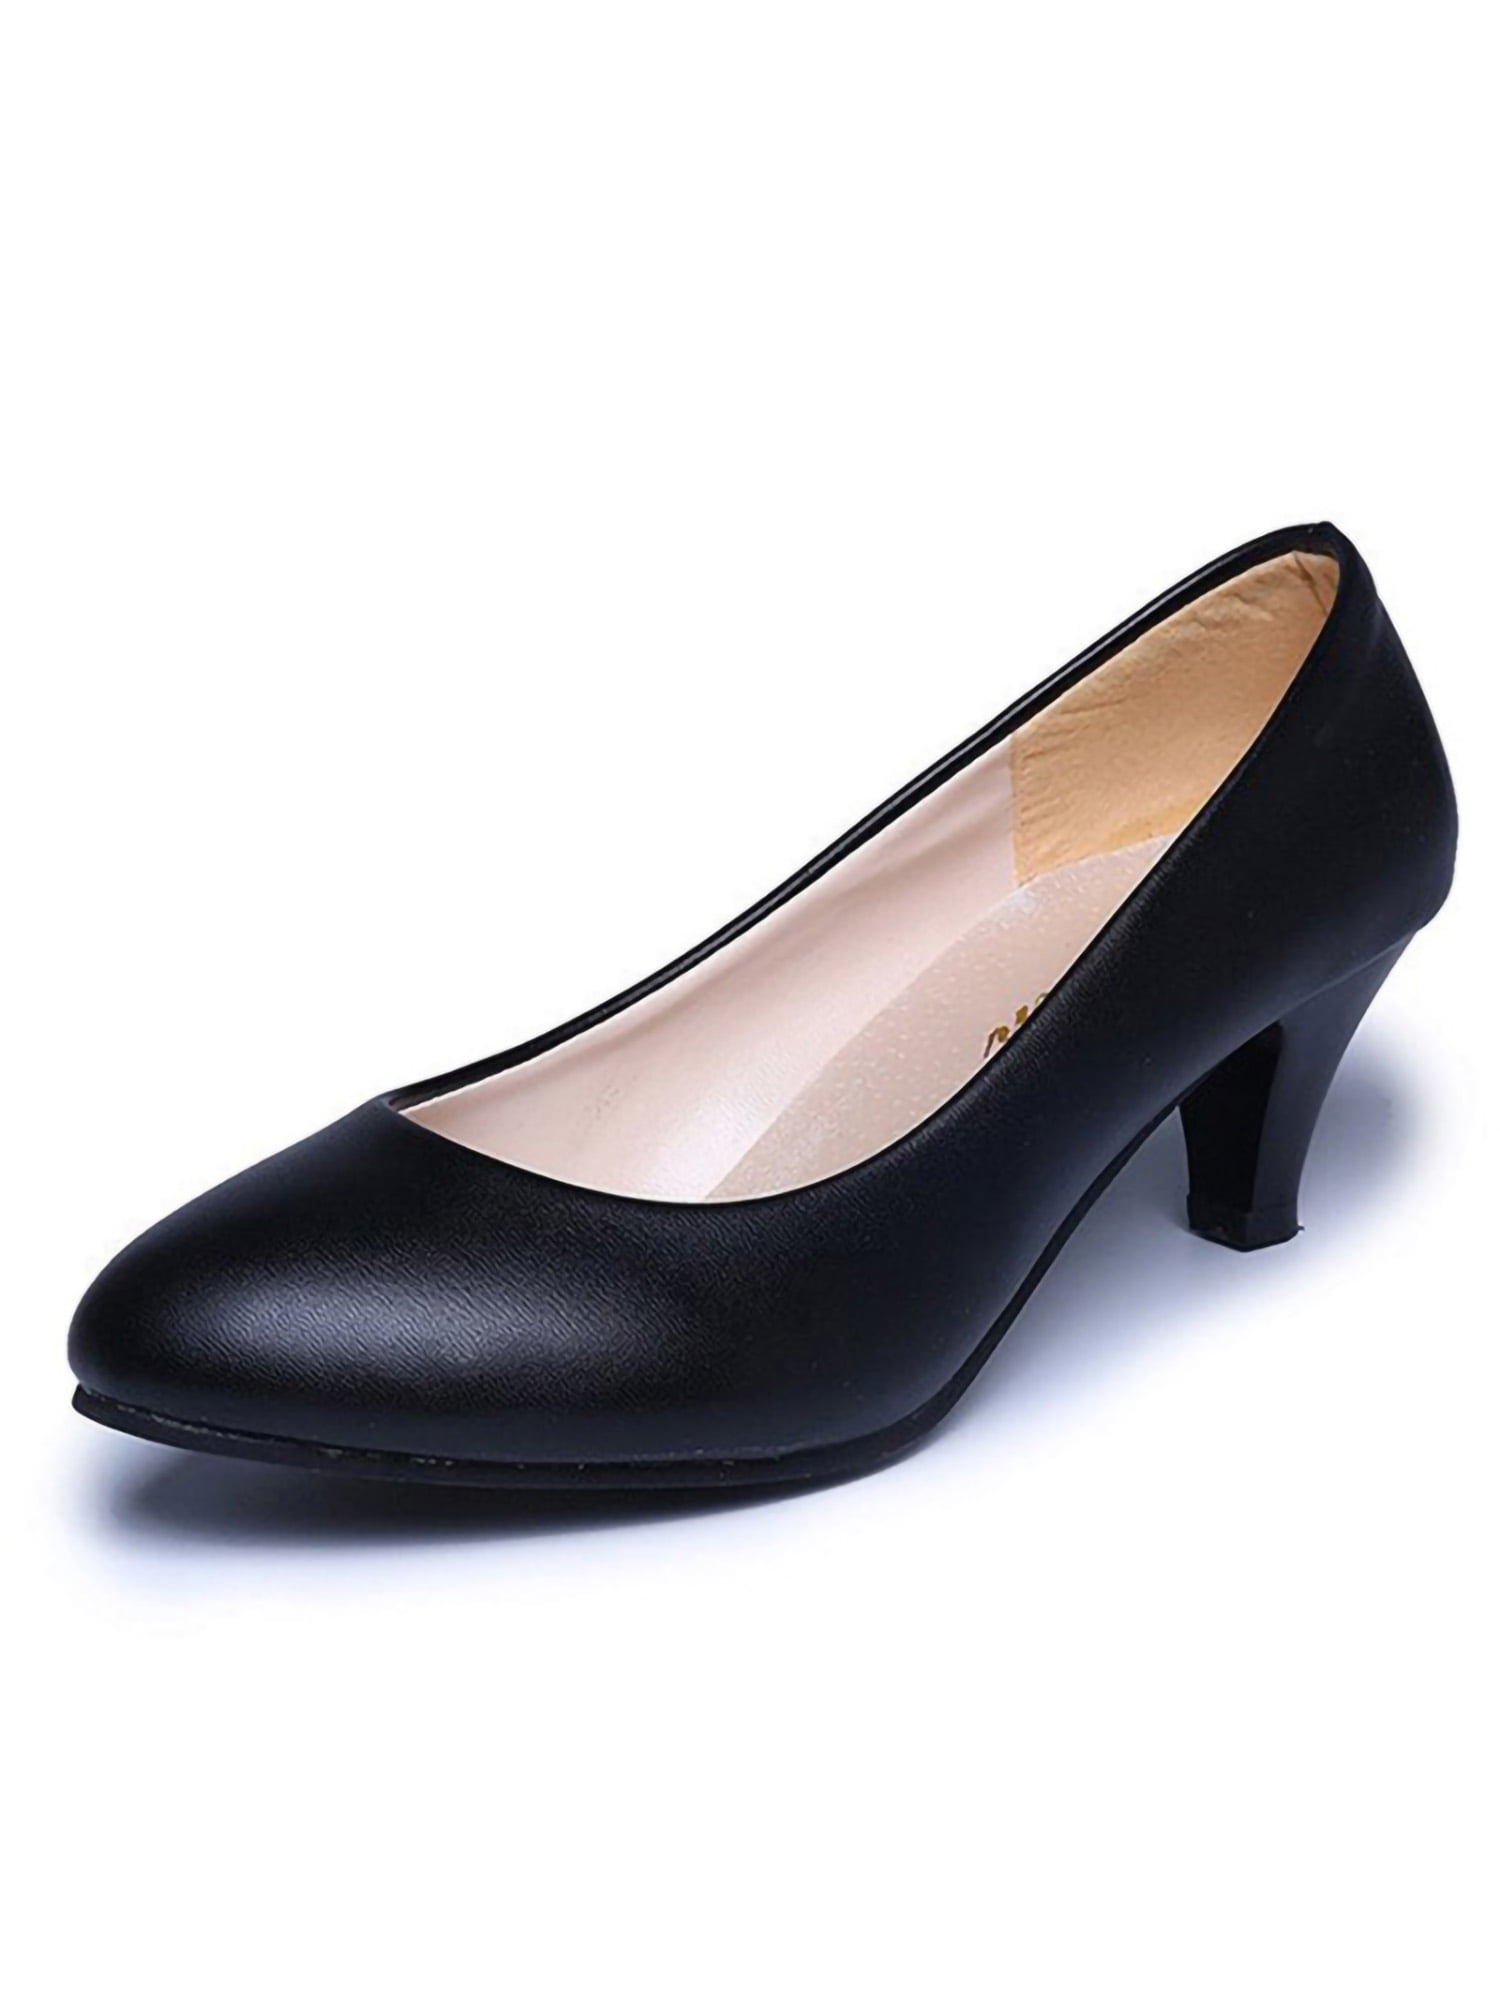 numberoneshoes - Small black heels on Designer Wardrobe